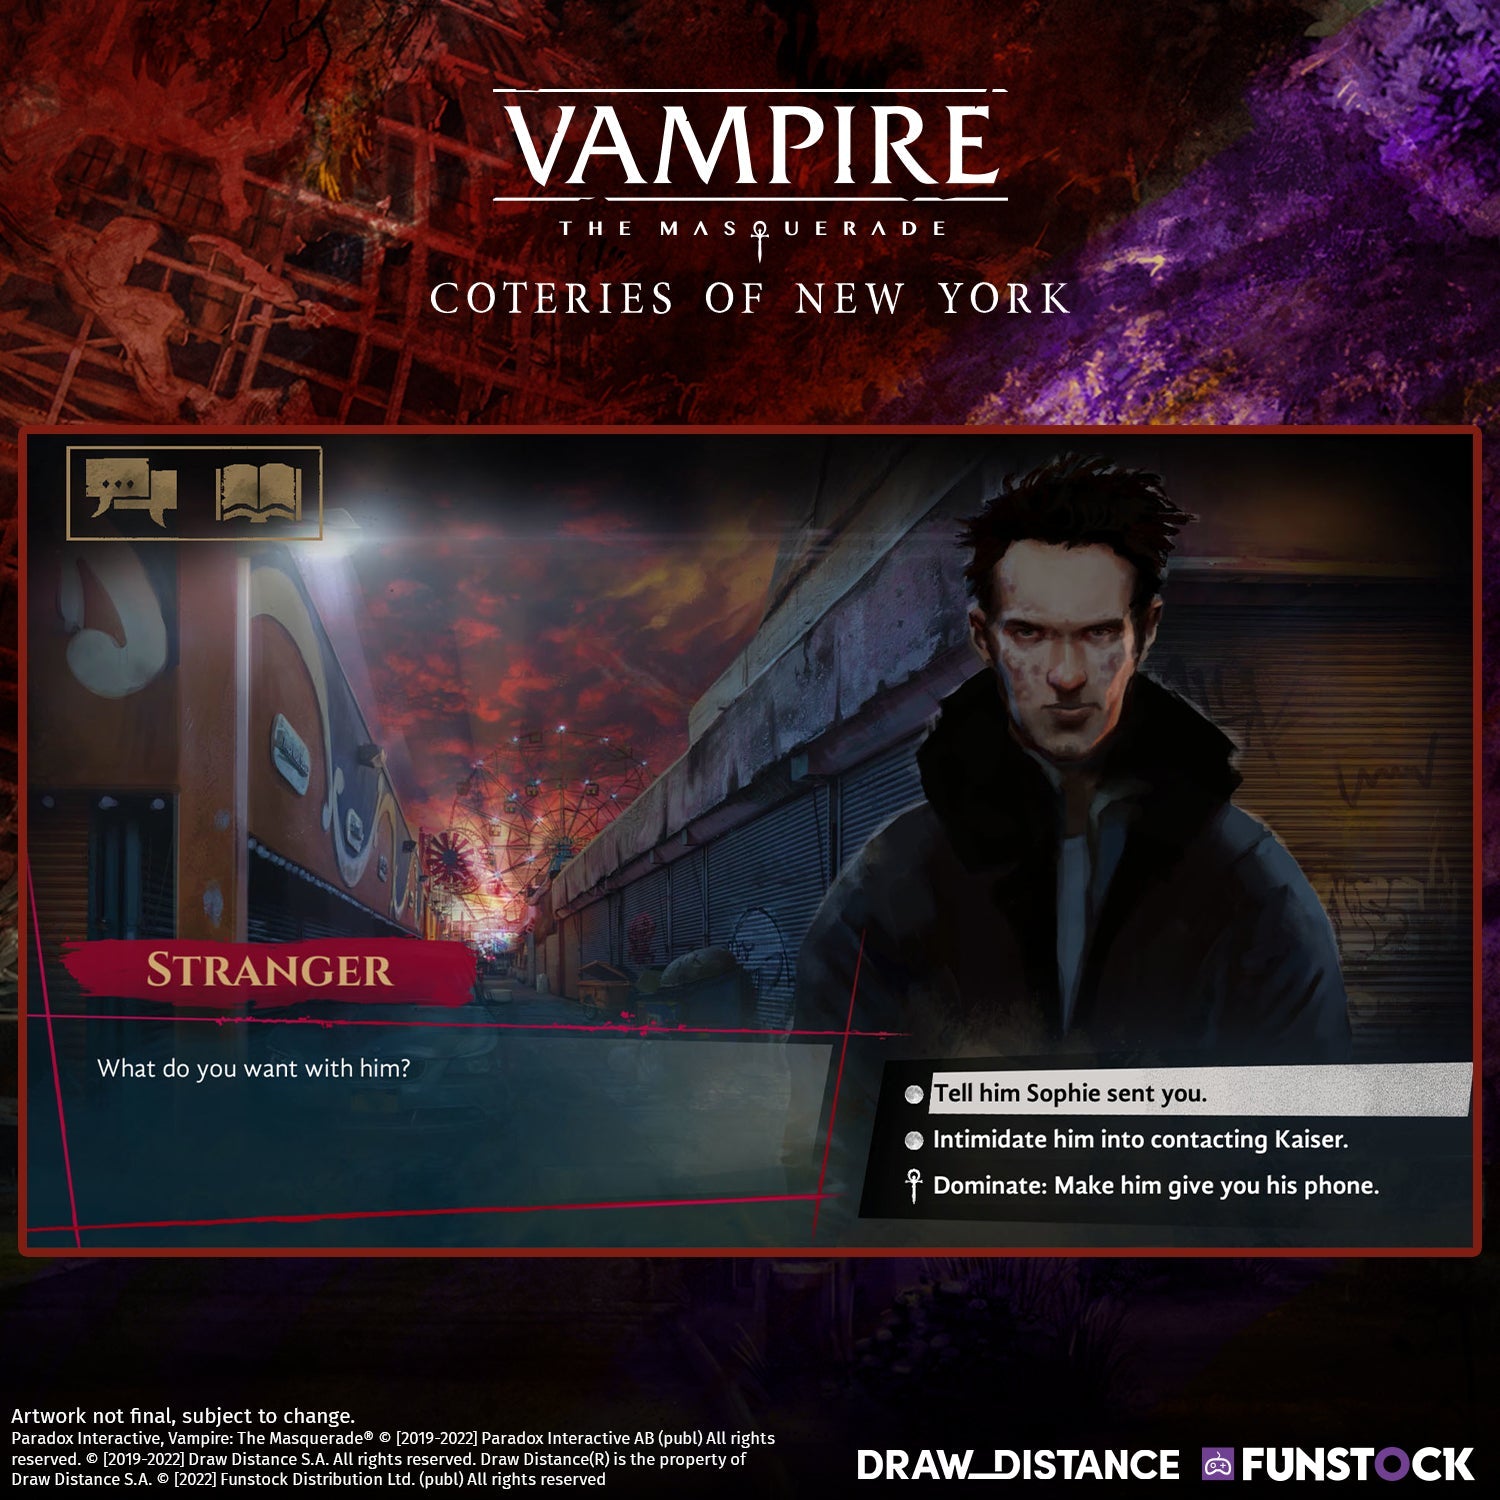 Buy PlayStation 4 Vampire The Masquerade Coteries And Shadows Of New York